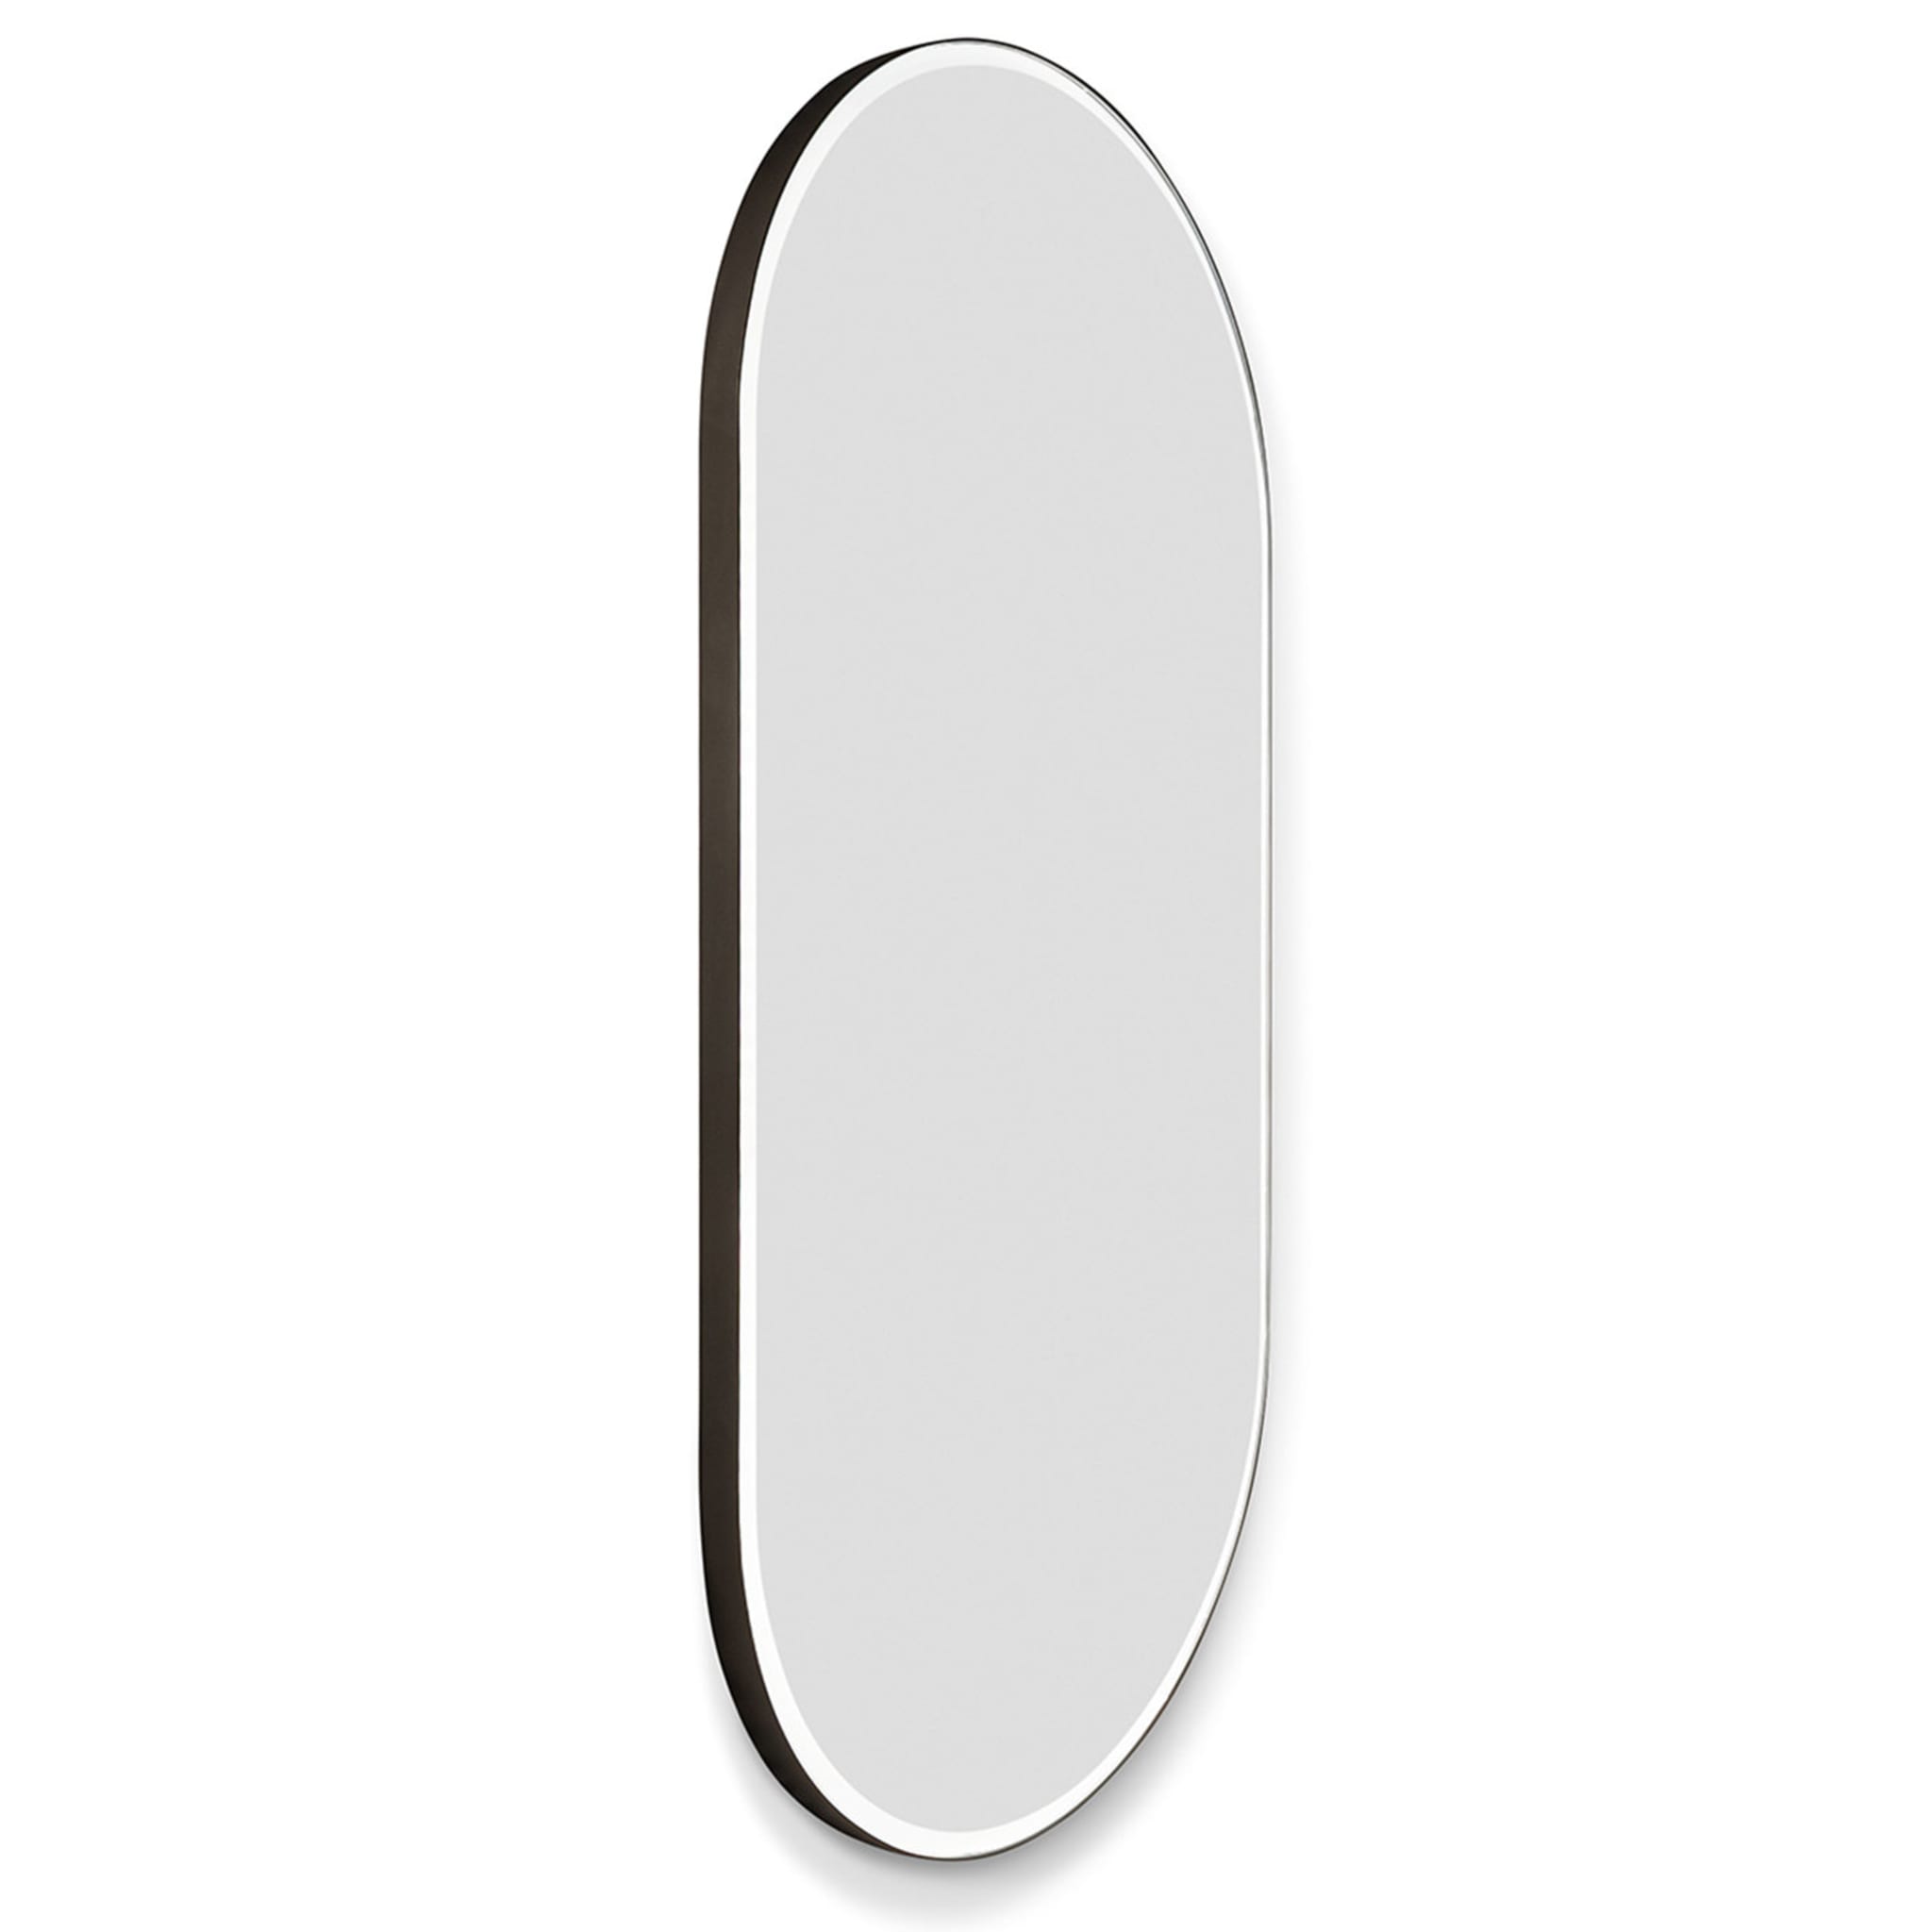 Oval Mirari Mirror by Elisa Ossino - Alternative view 1